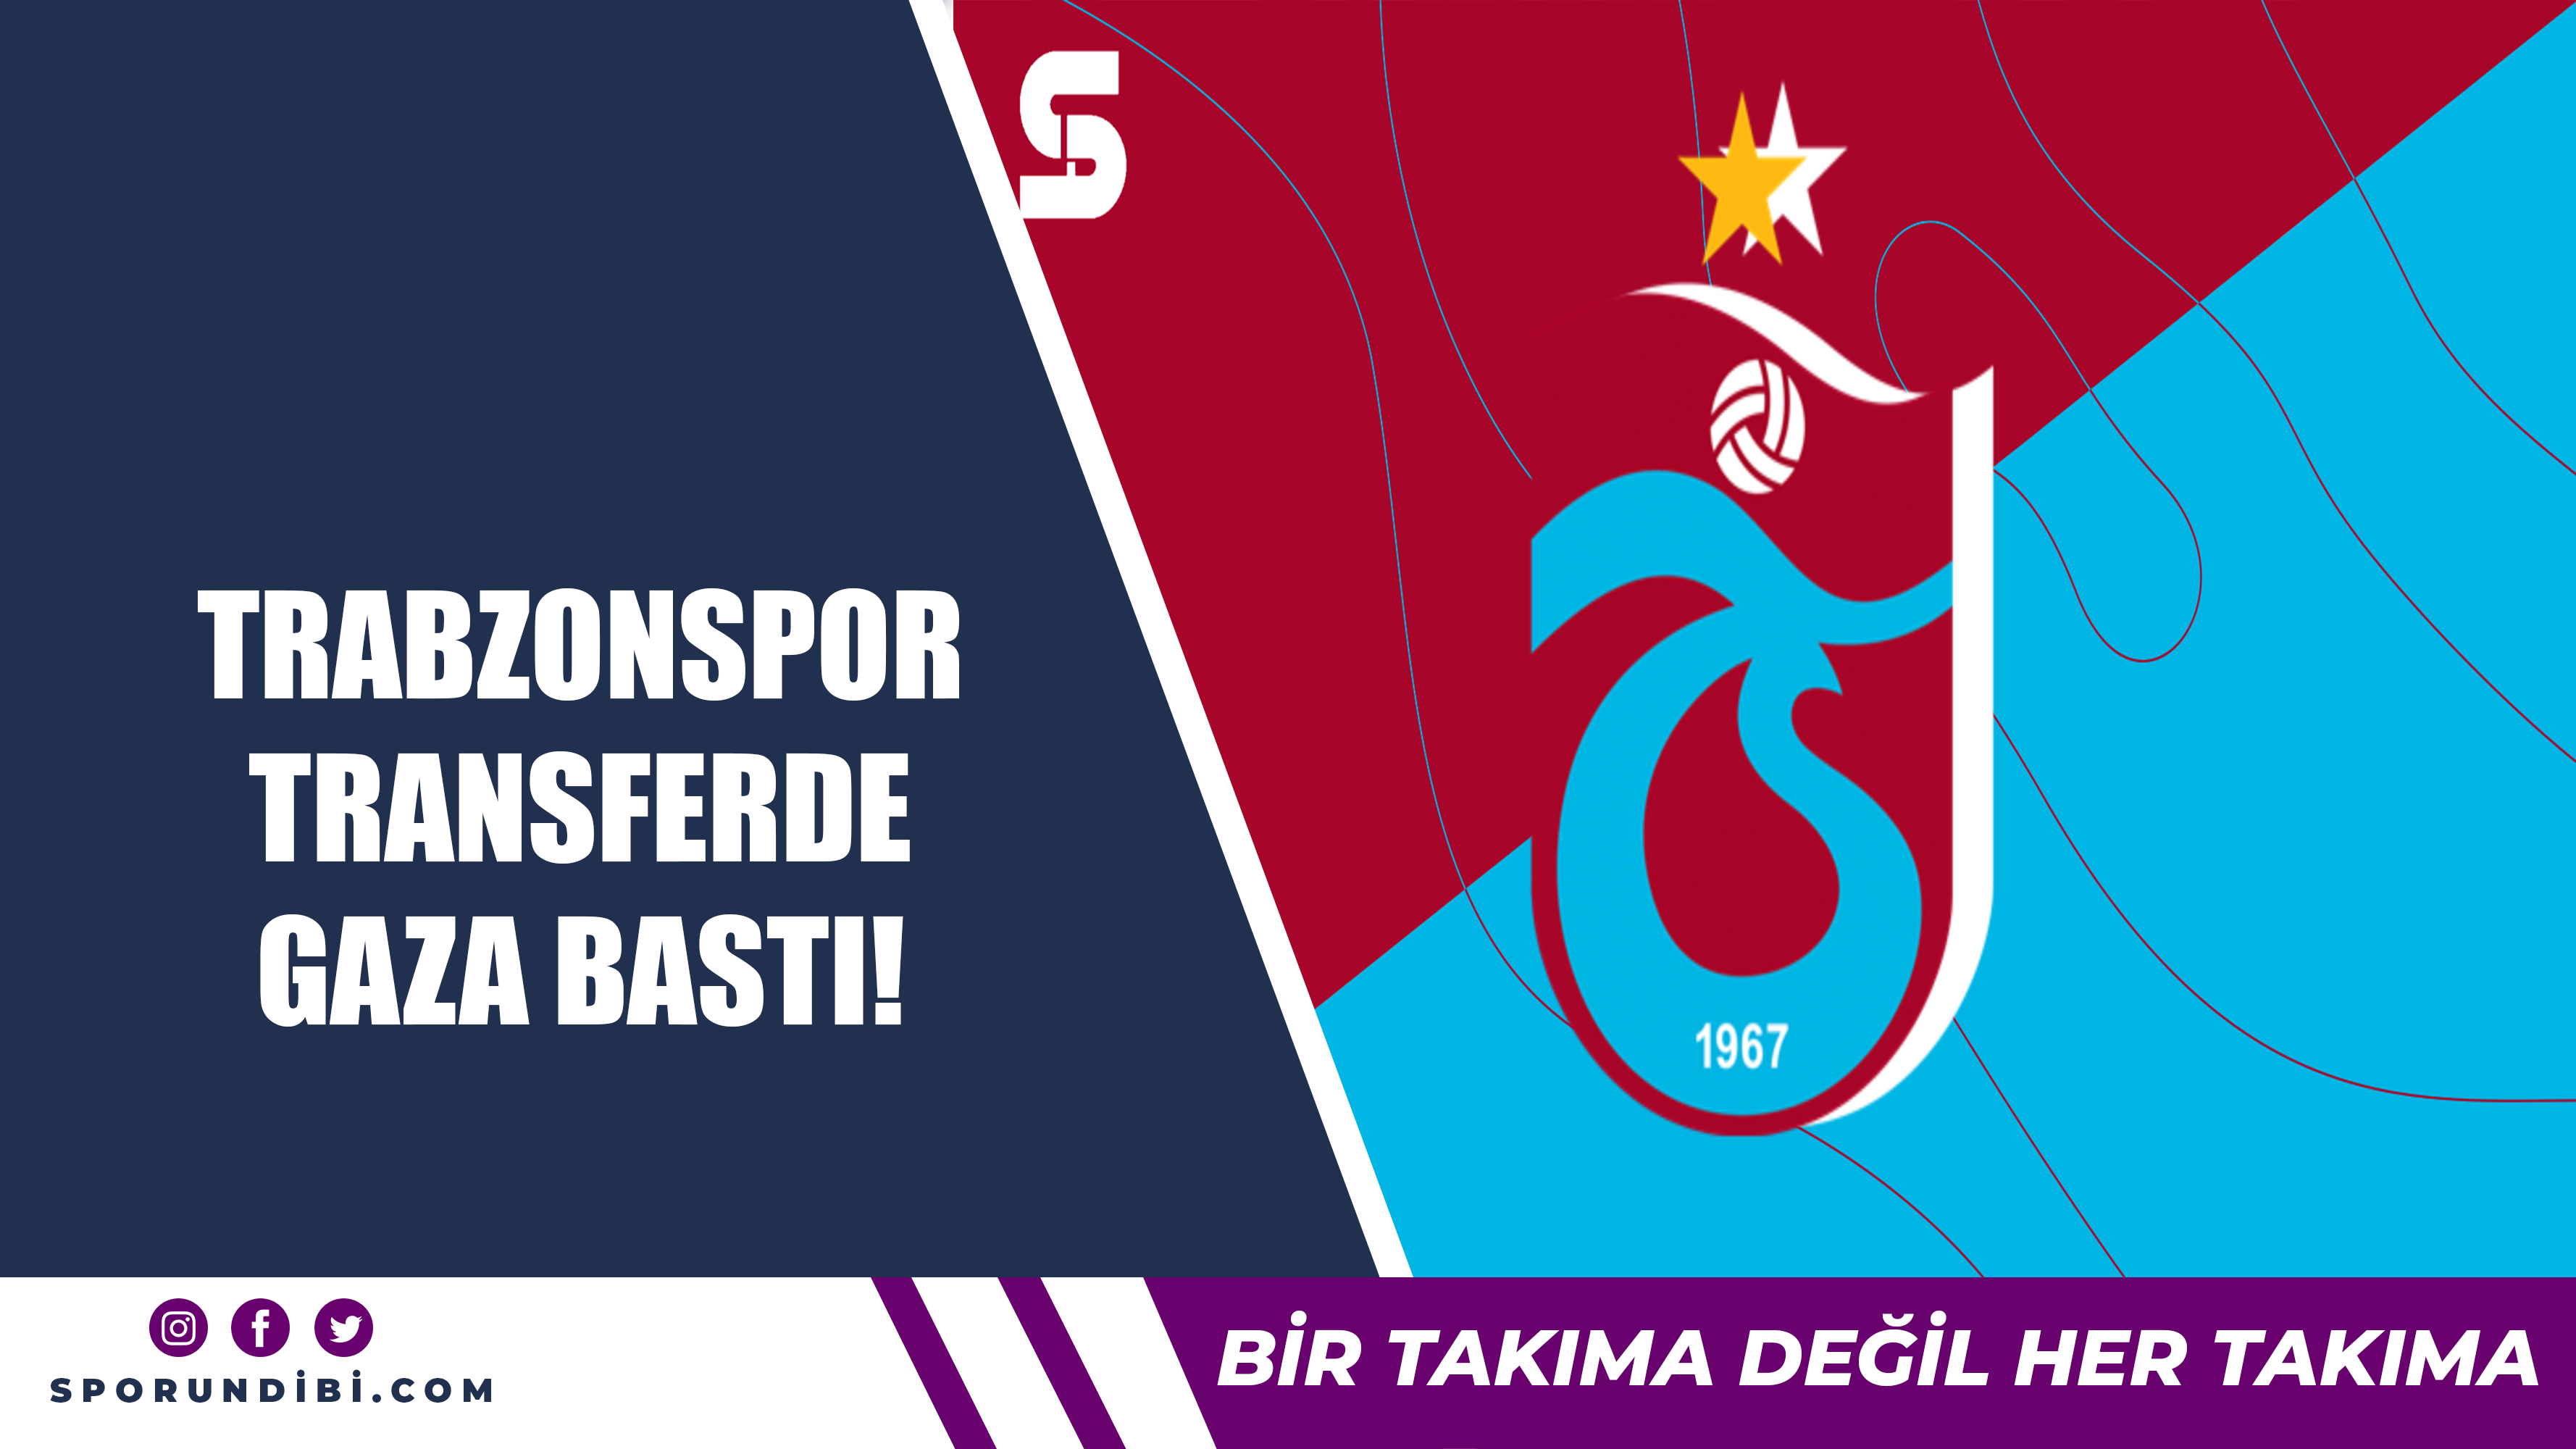 Trabzonspor transferde gaza bastı!